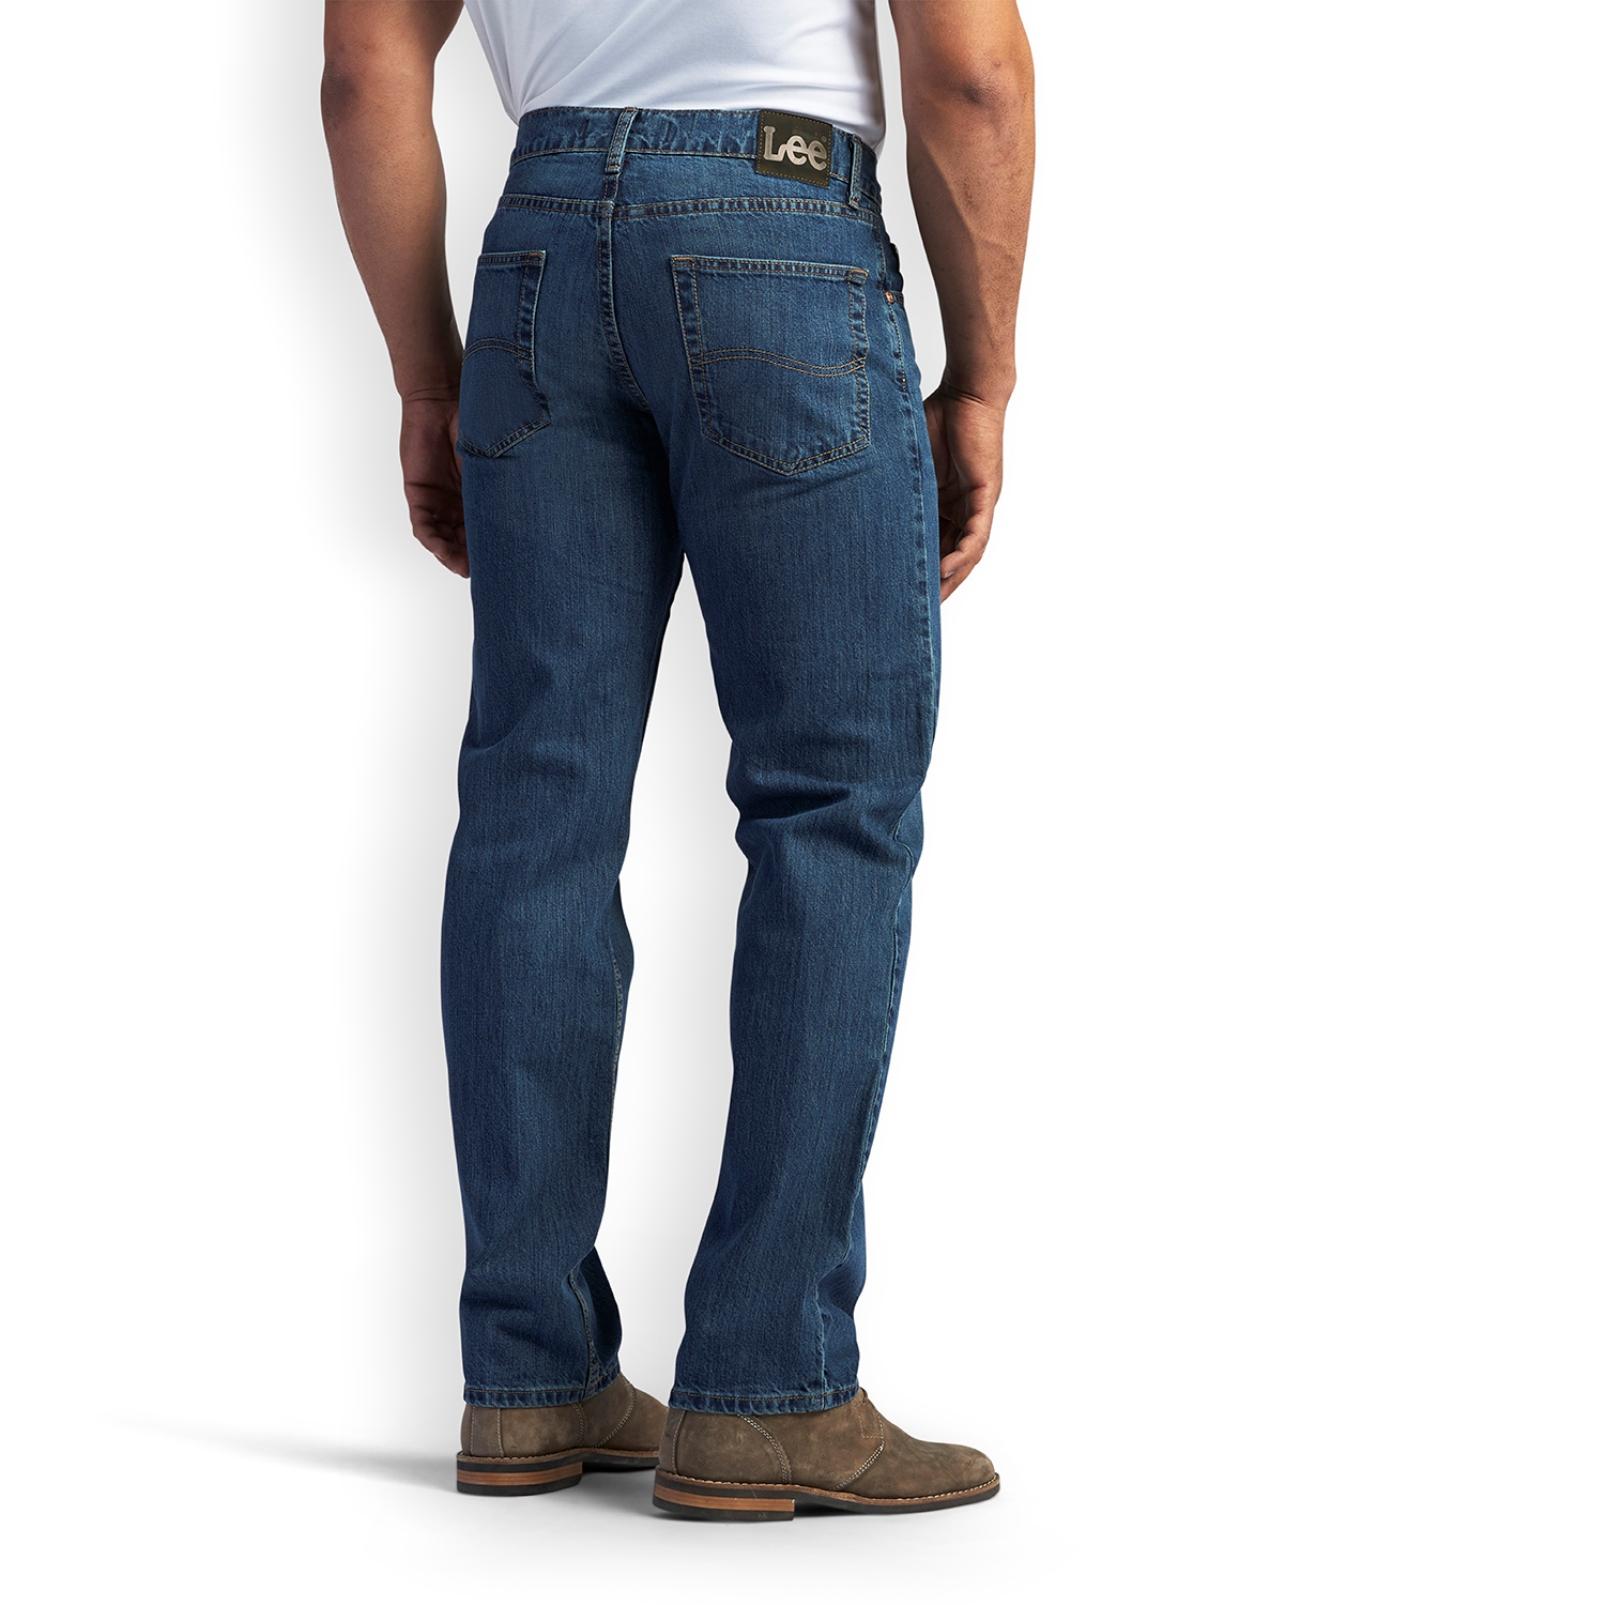 classic fit jeans